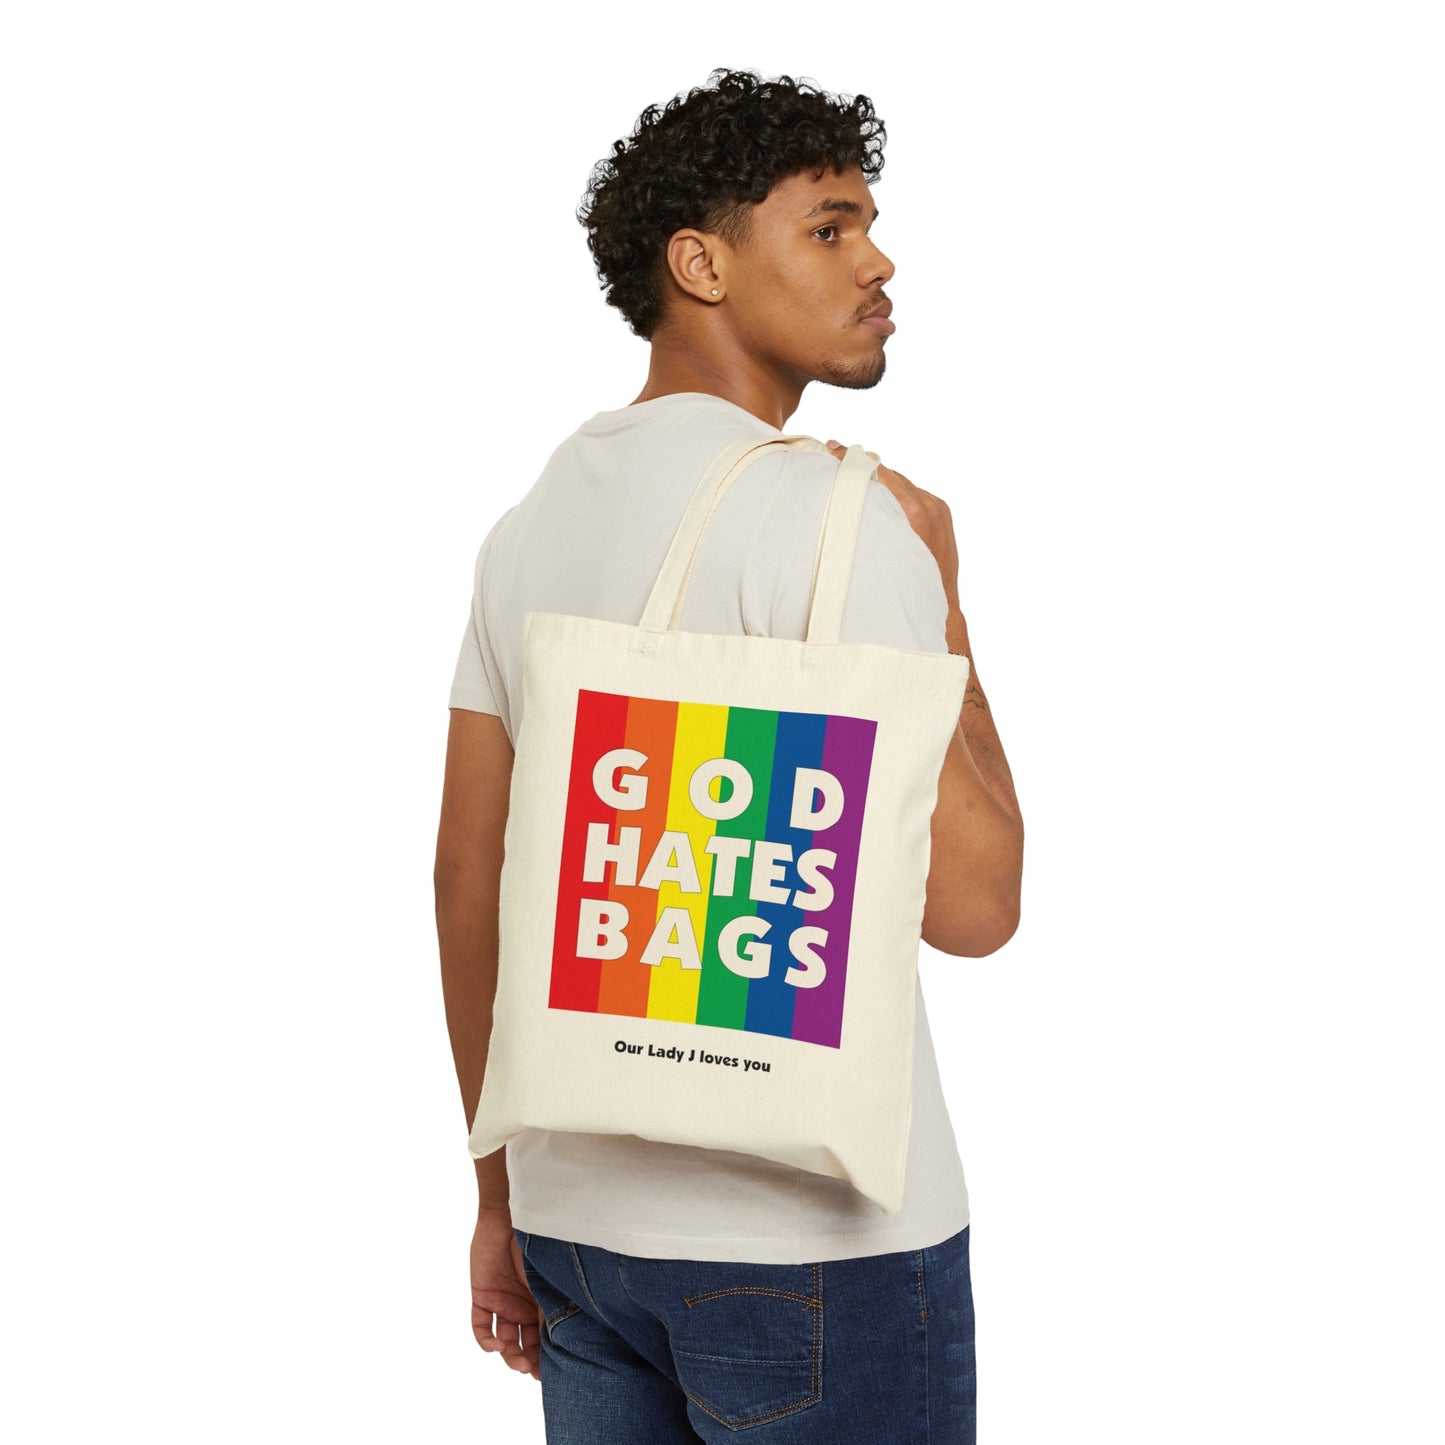 God Hates Bags Tote-bag